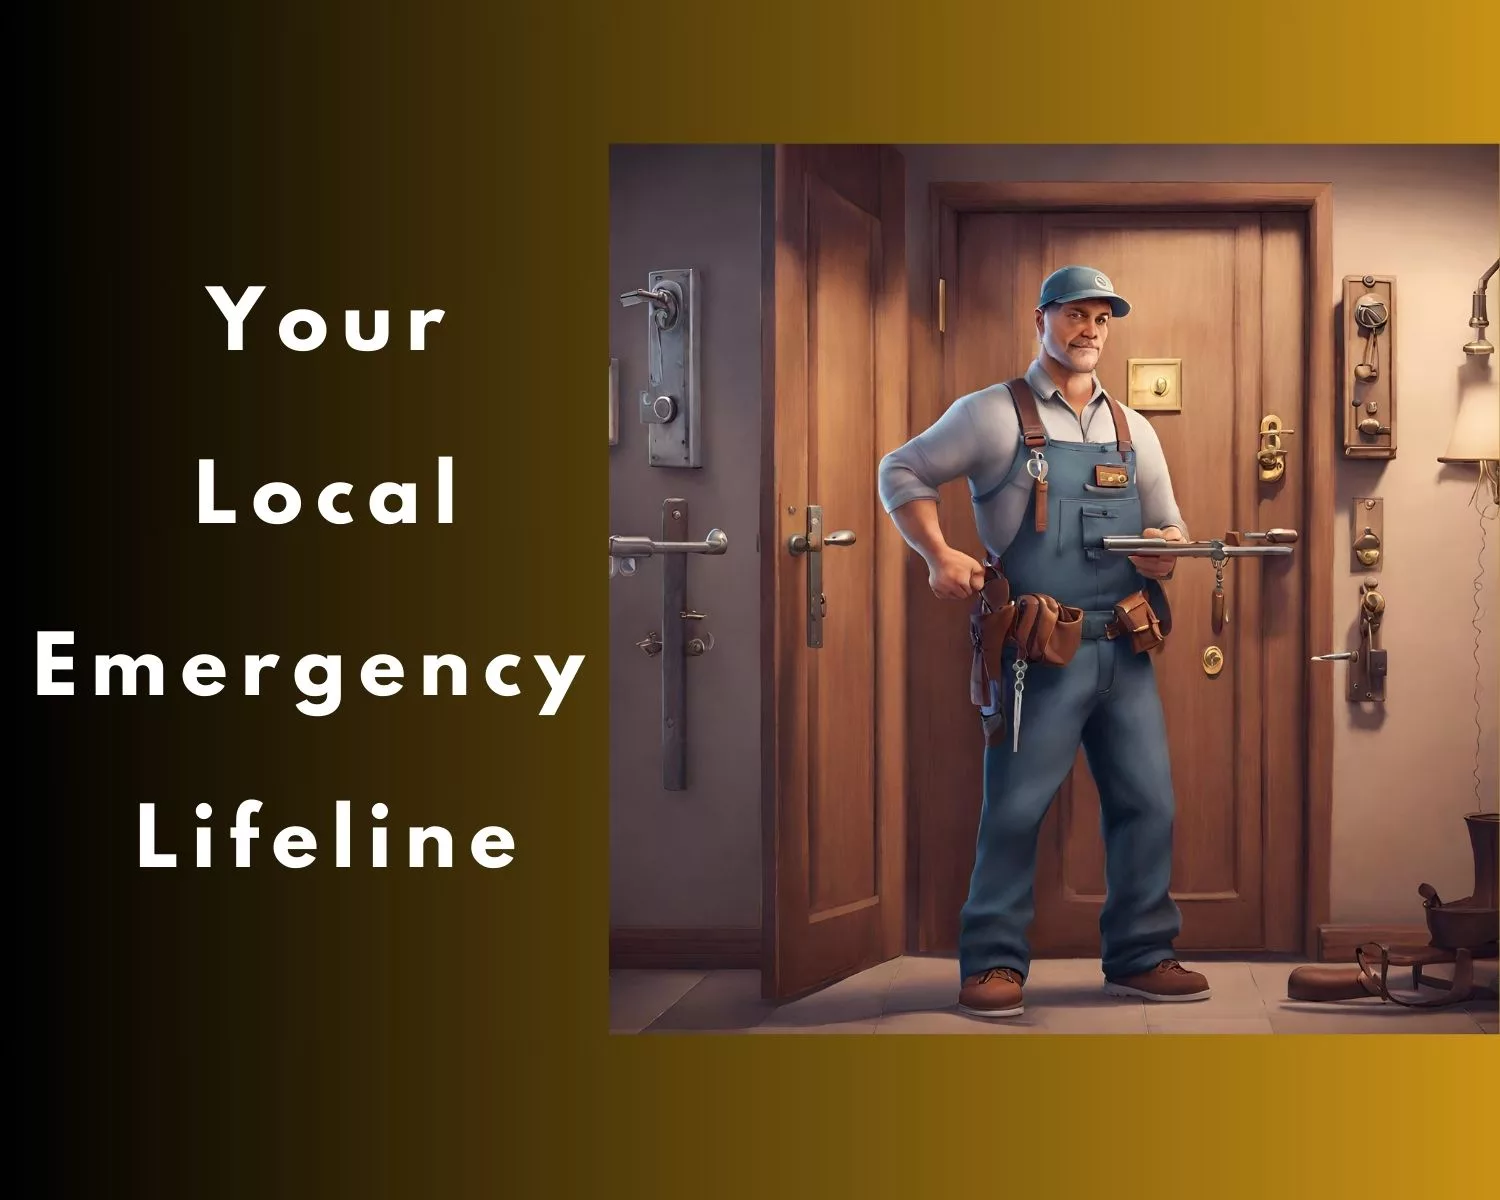 Your Local Emergency Lifeline